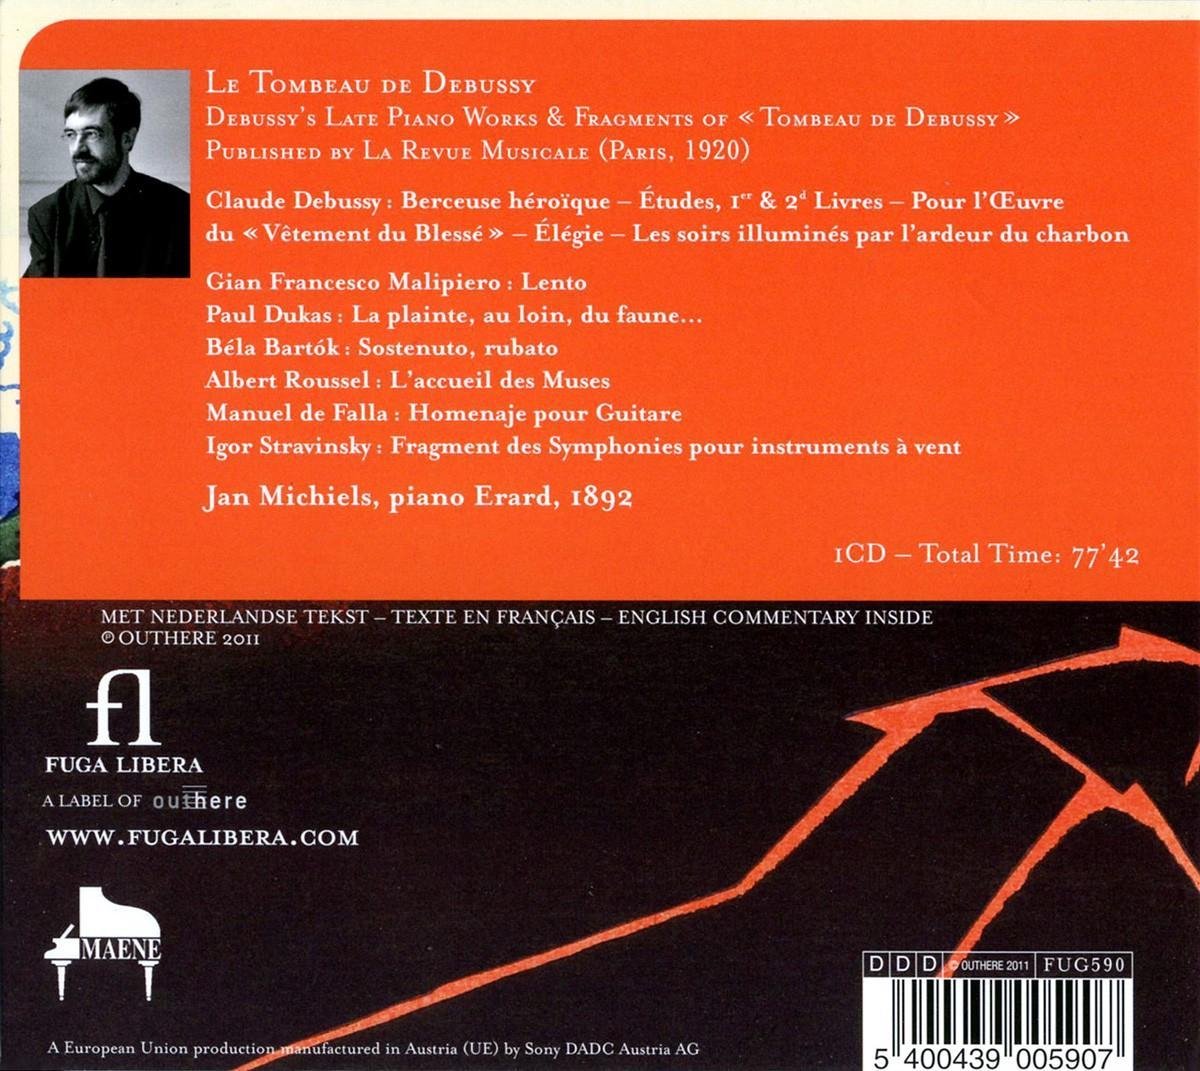 Le Tombeau de Debussy - slide-1